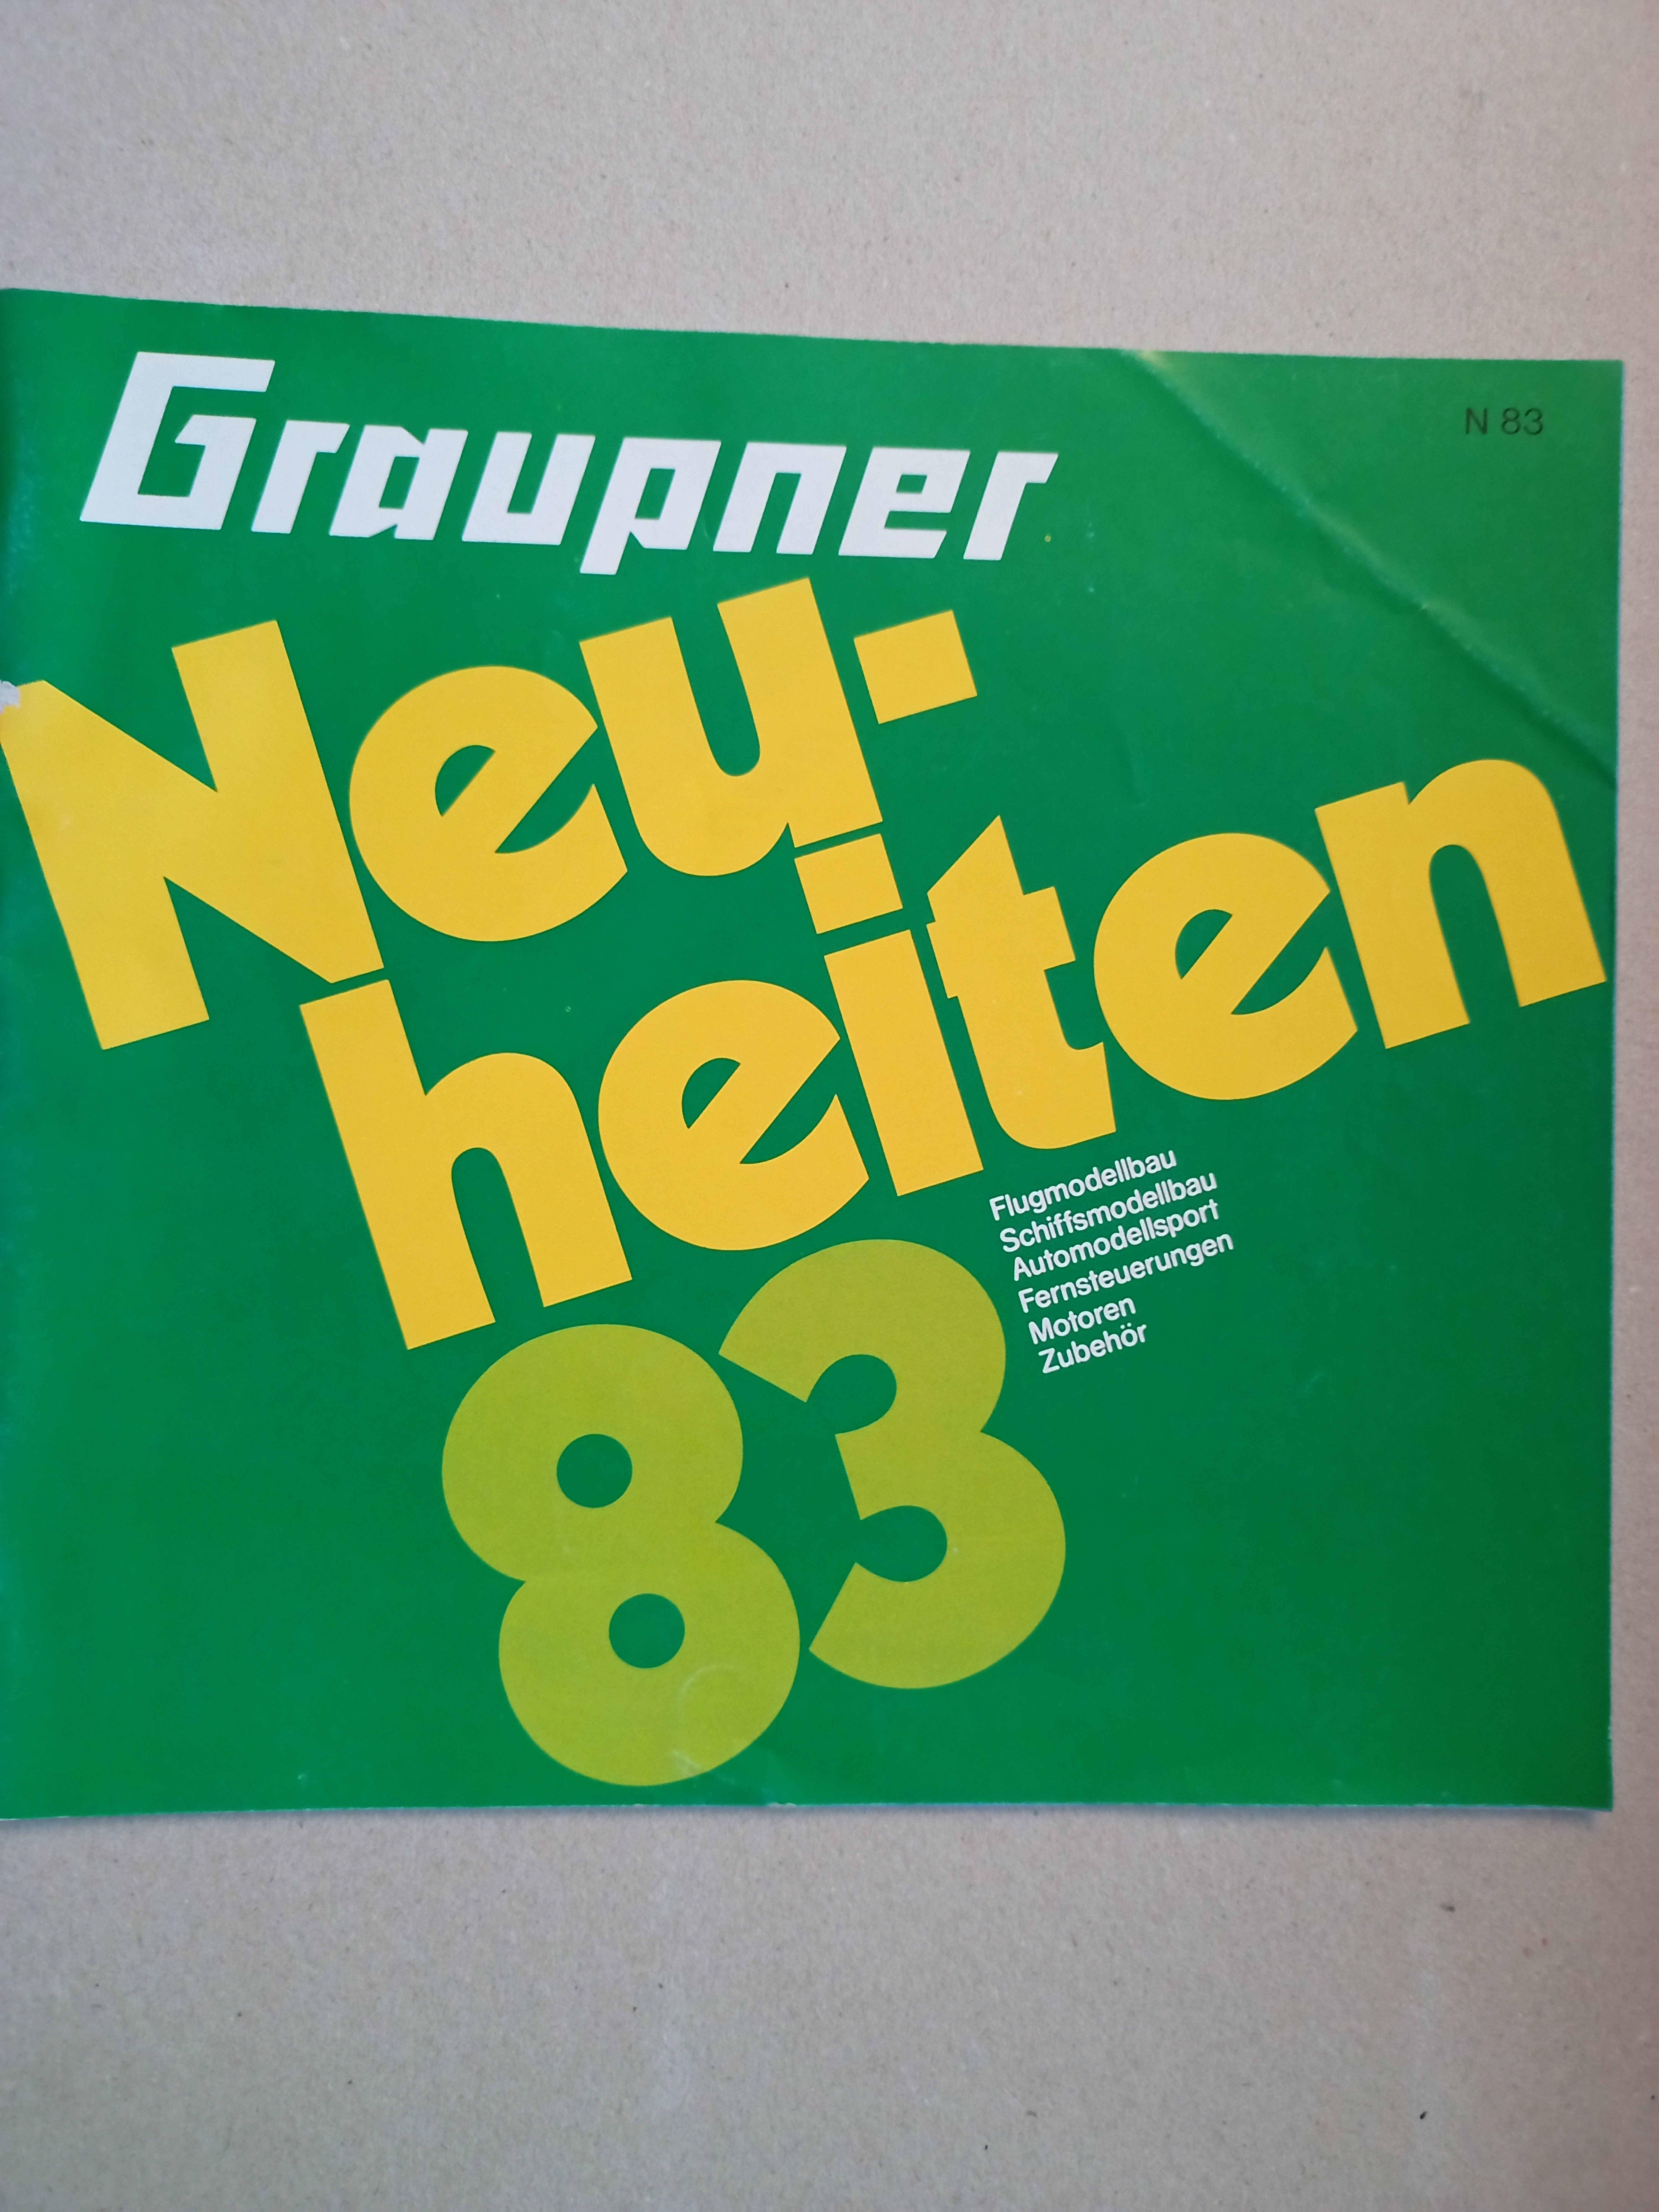 Graupner Neuheiten 1983 (Deutsches Segelflugmuseum mit Modellflug CC BY-NC-SA)